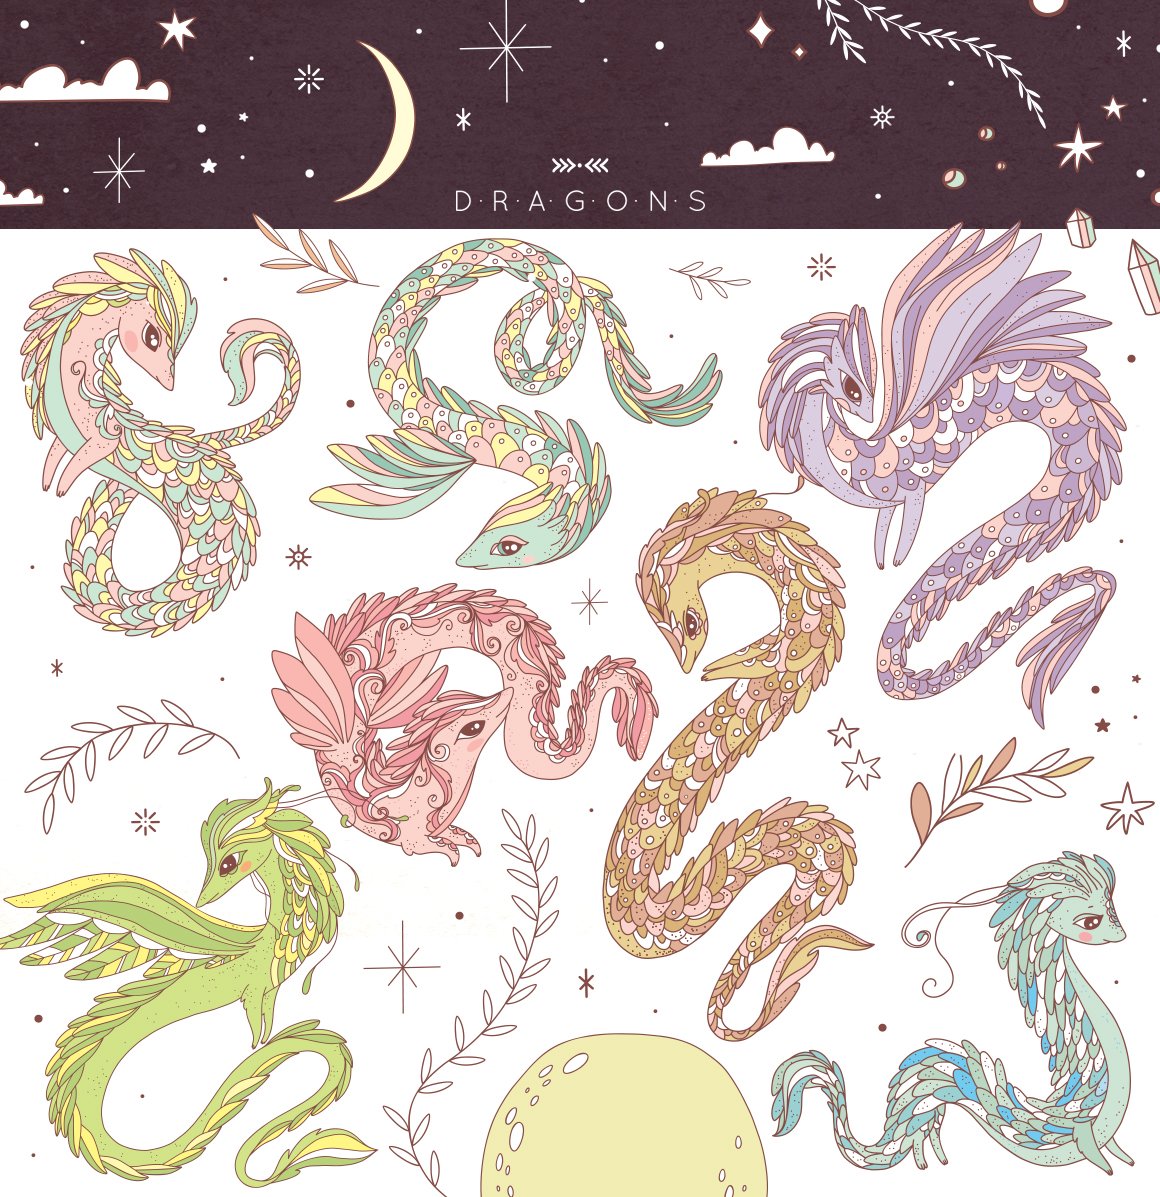 Fantastic Dragon illustration preview image.